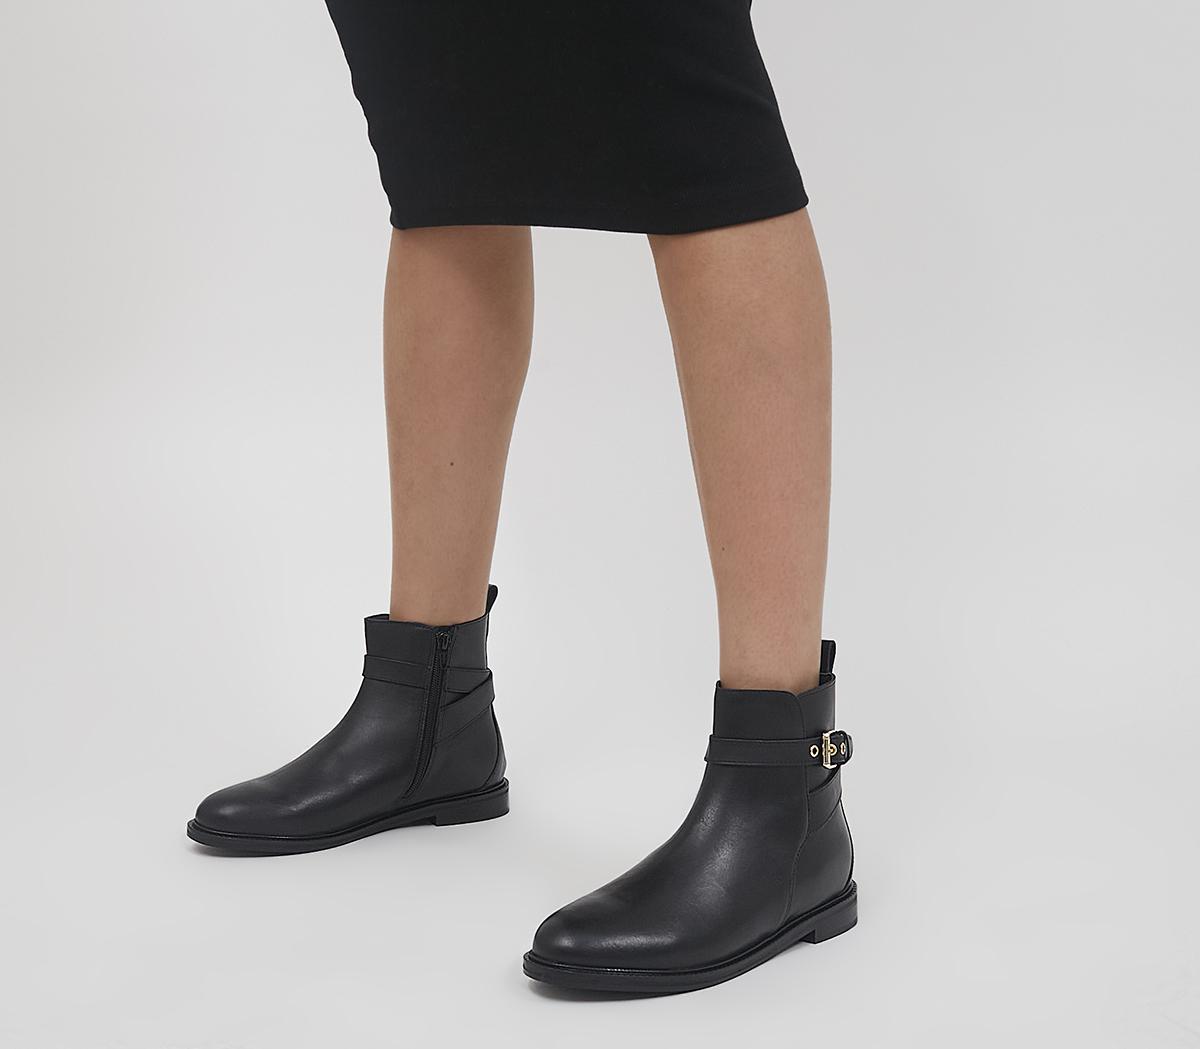 OfficeAshford Clean Jodphur Flat Ankle BootsBlack Leather